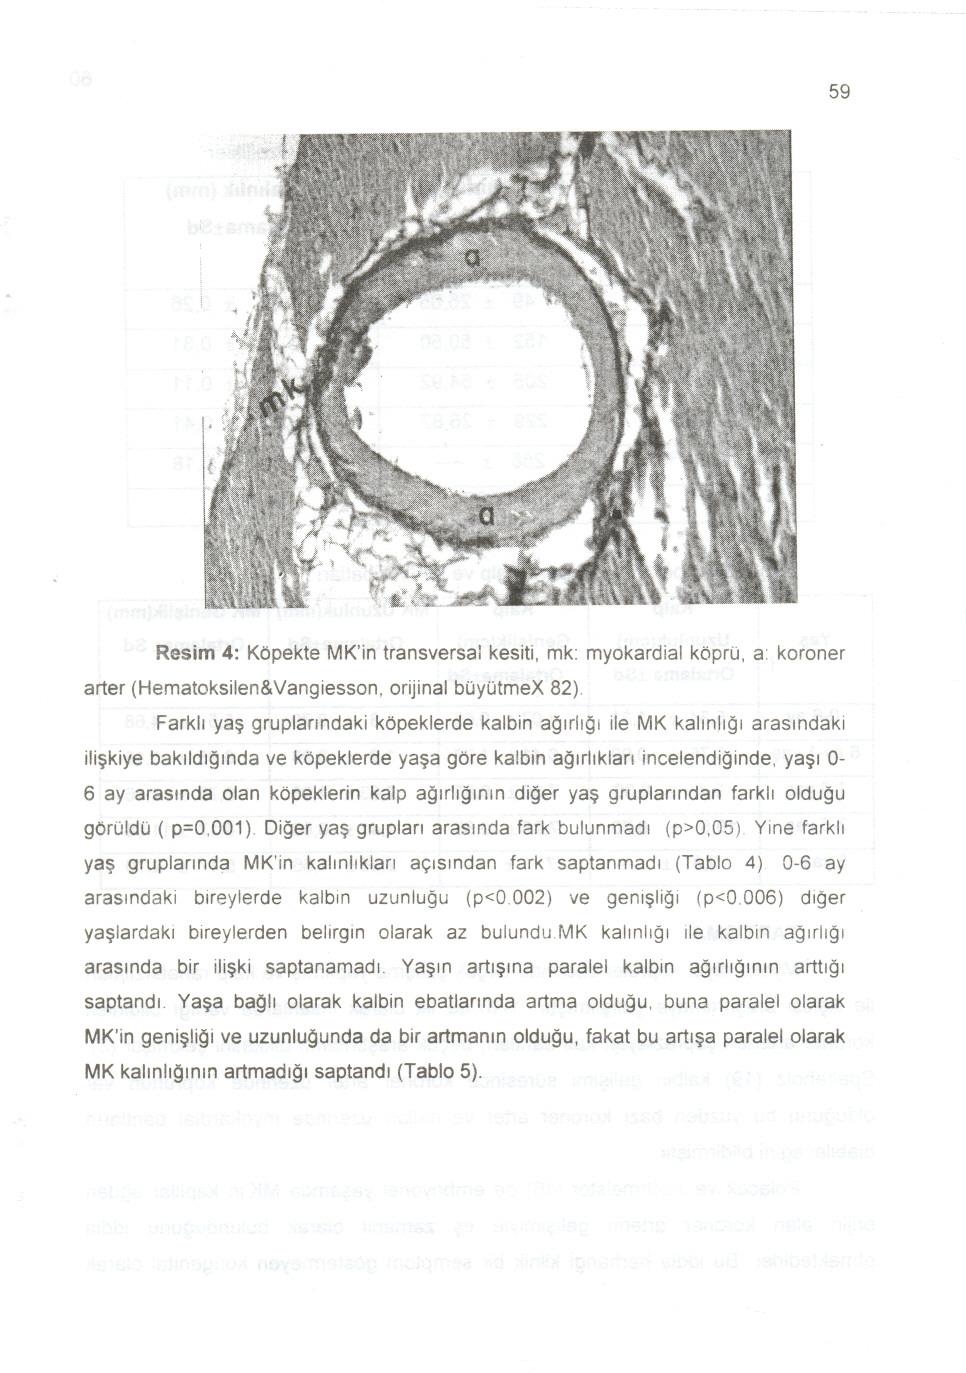 59 Resim 4: Kopekte MK'in transversal kesiti, mk: myokardial kbpru, a: koroner arter (Hematoksilen&Vangiesson, orijinal buyotmex 82).